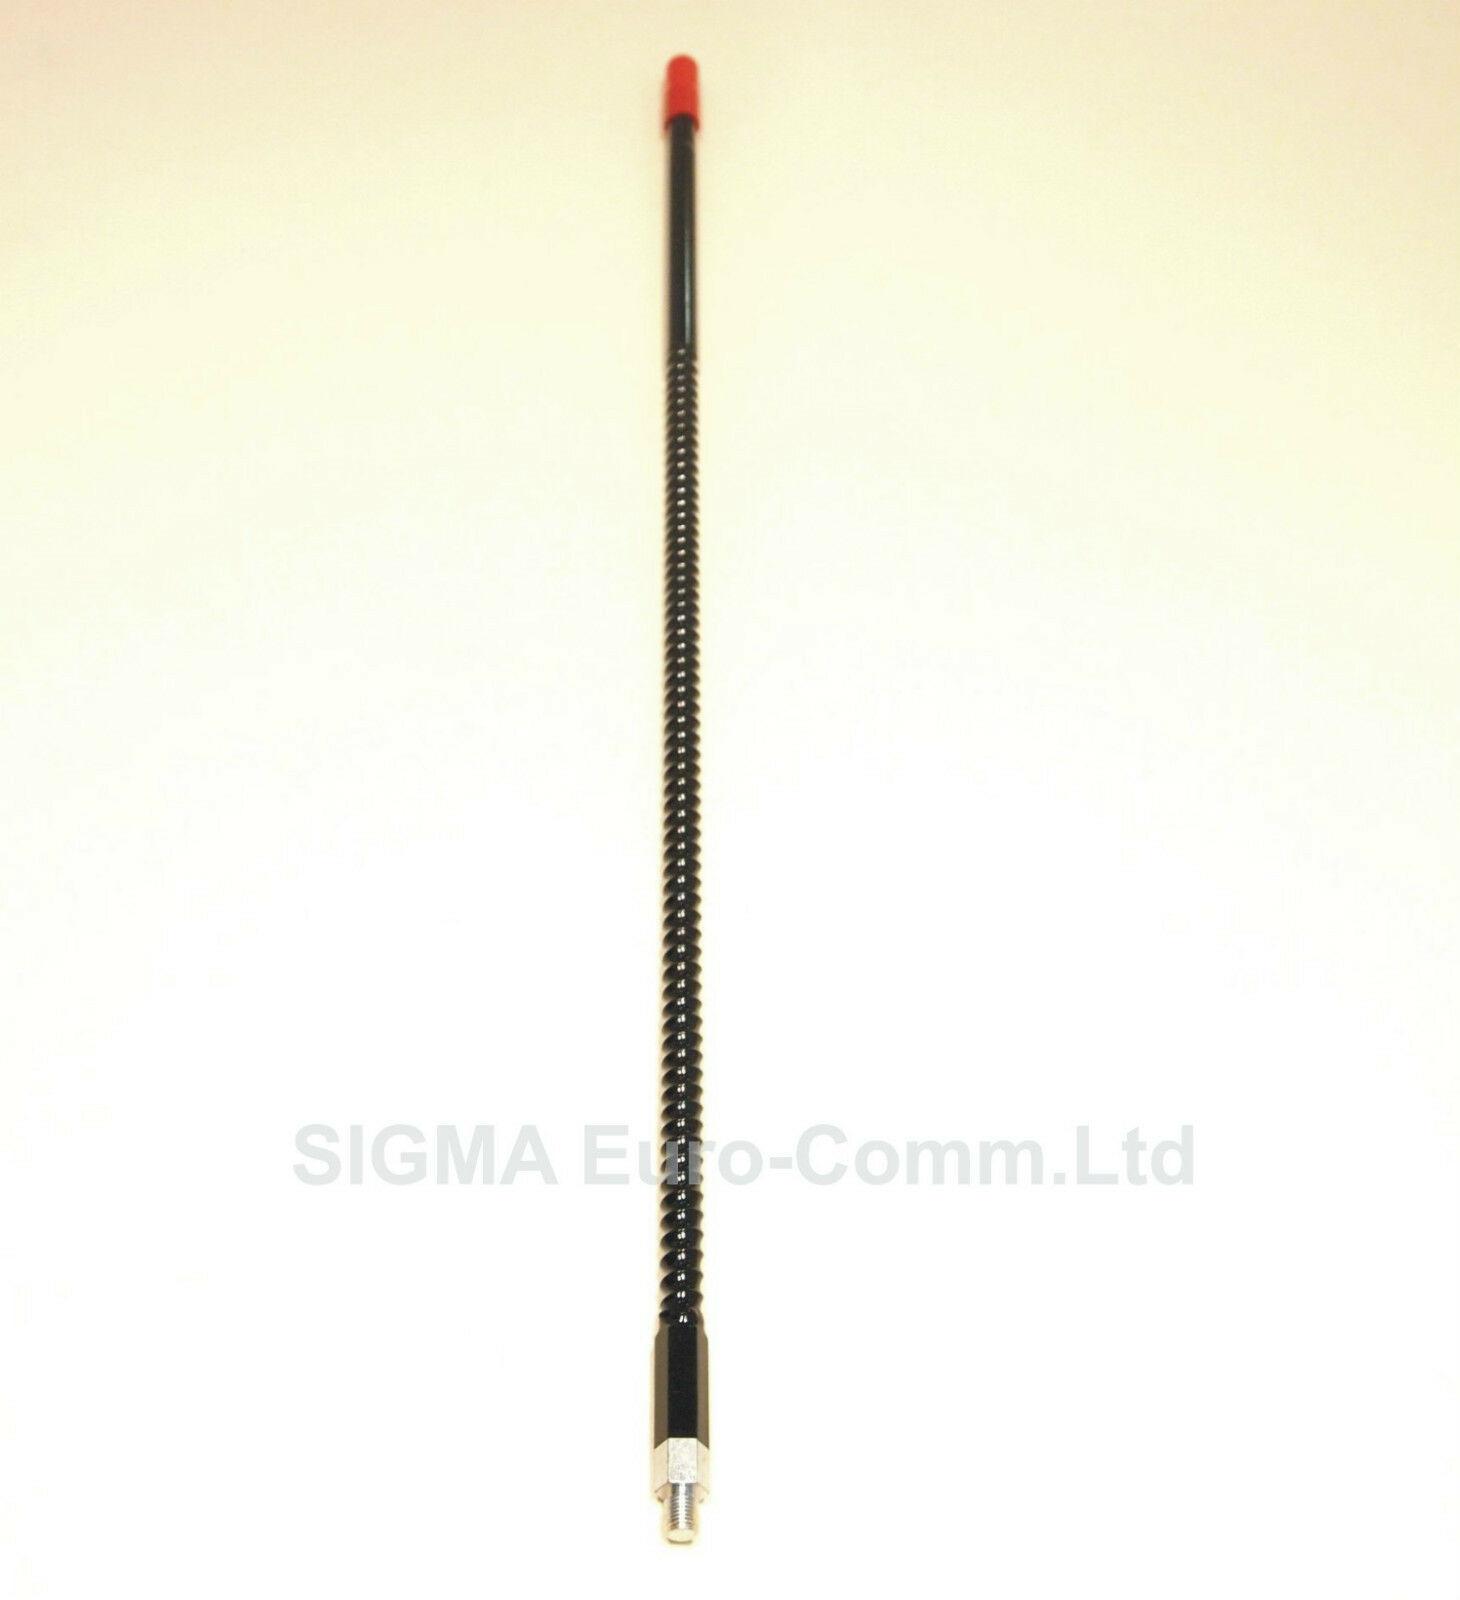 Sigma Power Stick 2 foot Black CB Antenna CB radio fire stick type Aerial